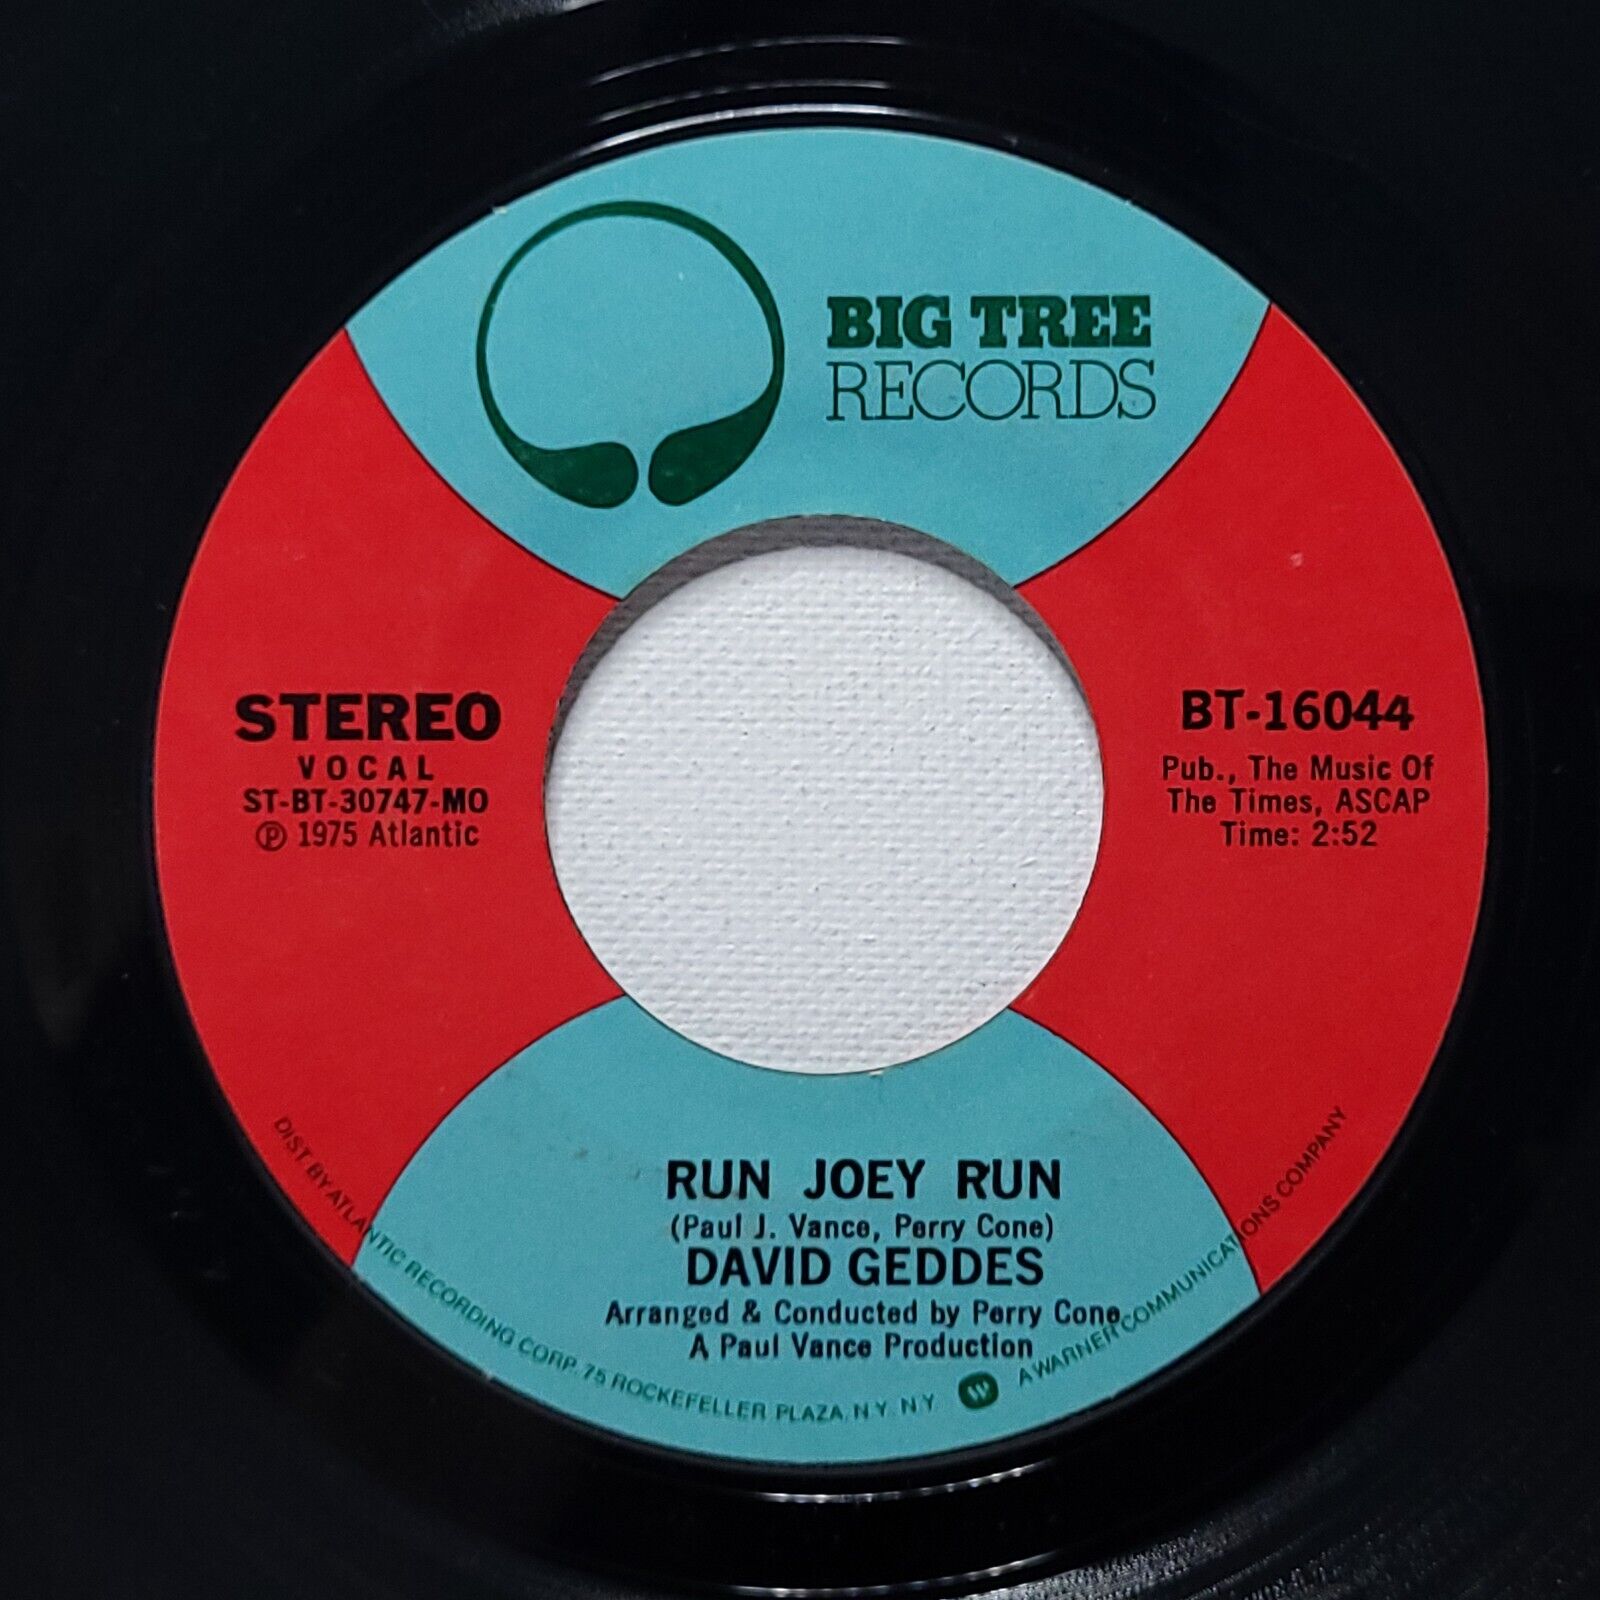 David Geddes 45 Record Run Joey Run / Honey Don't Blow It on Big Tree VG+ Rock